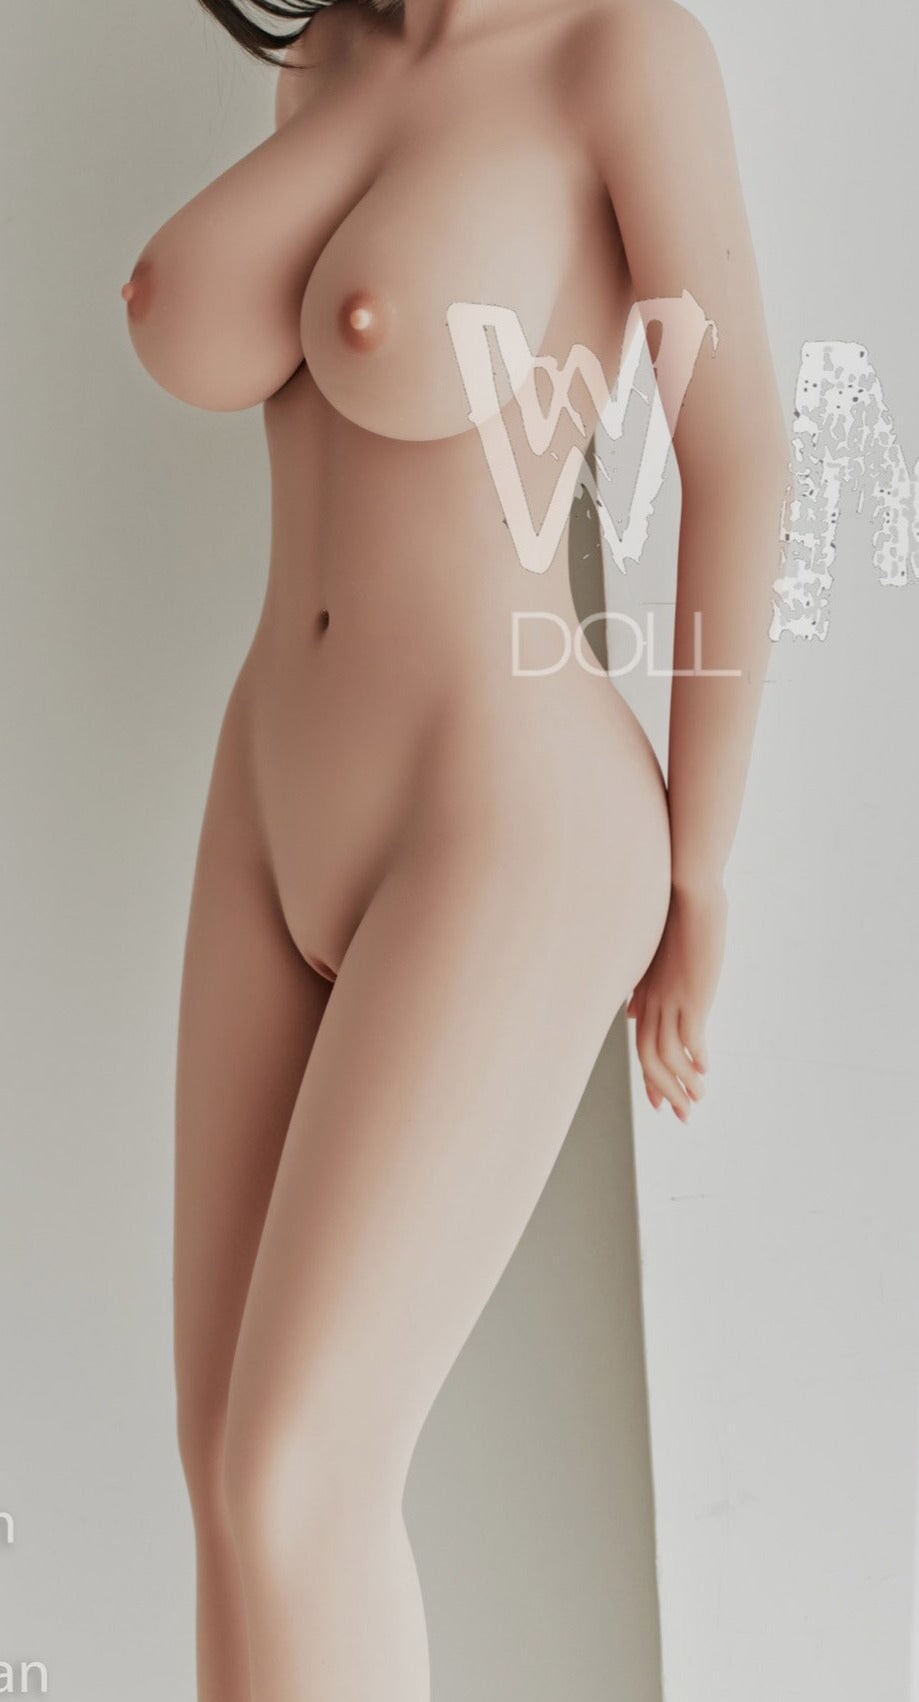 5'5" (168cm) - E-Cup Body WM Dolls